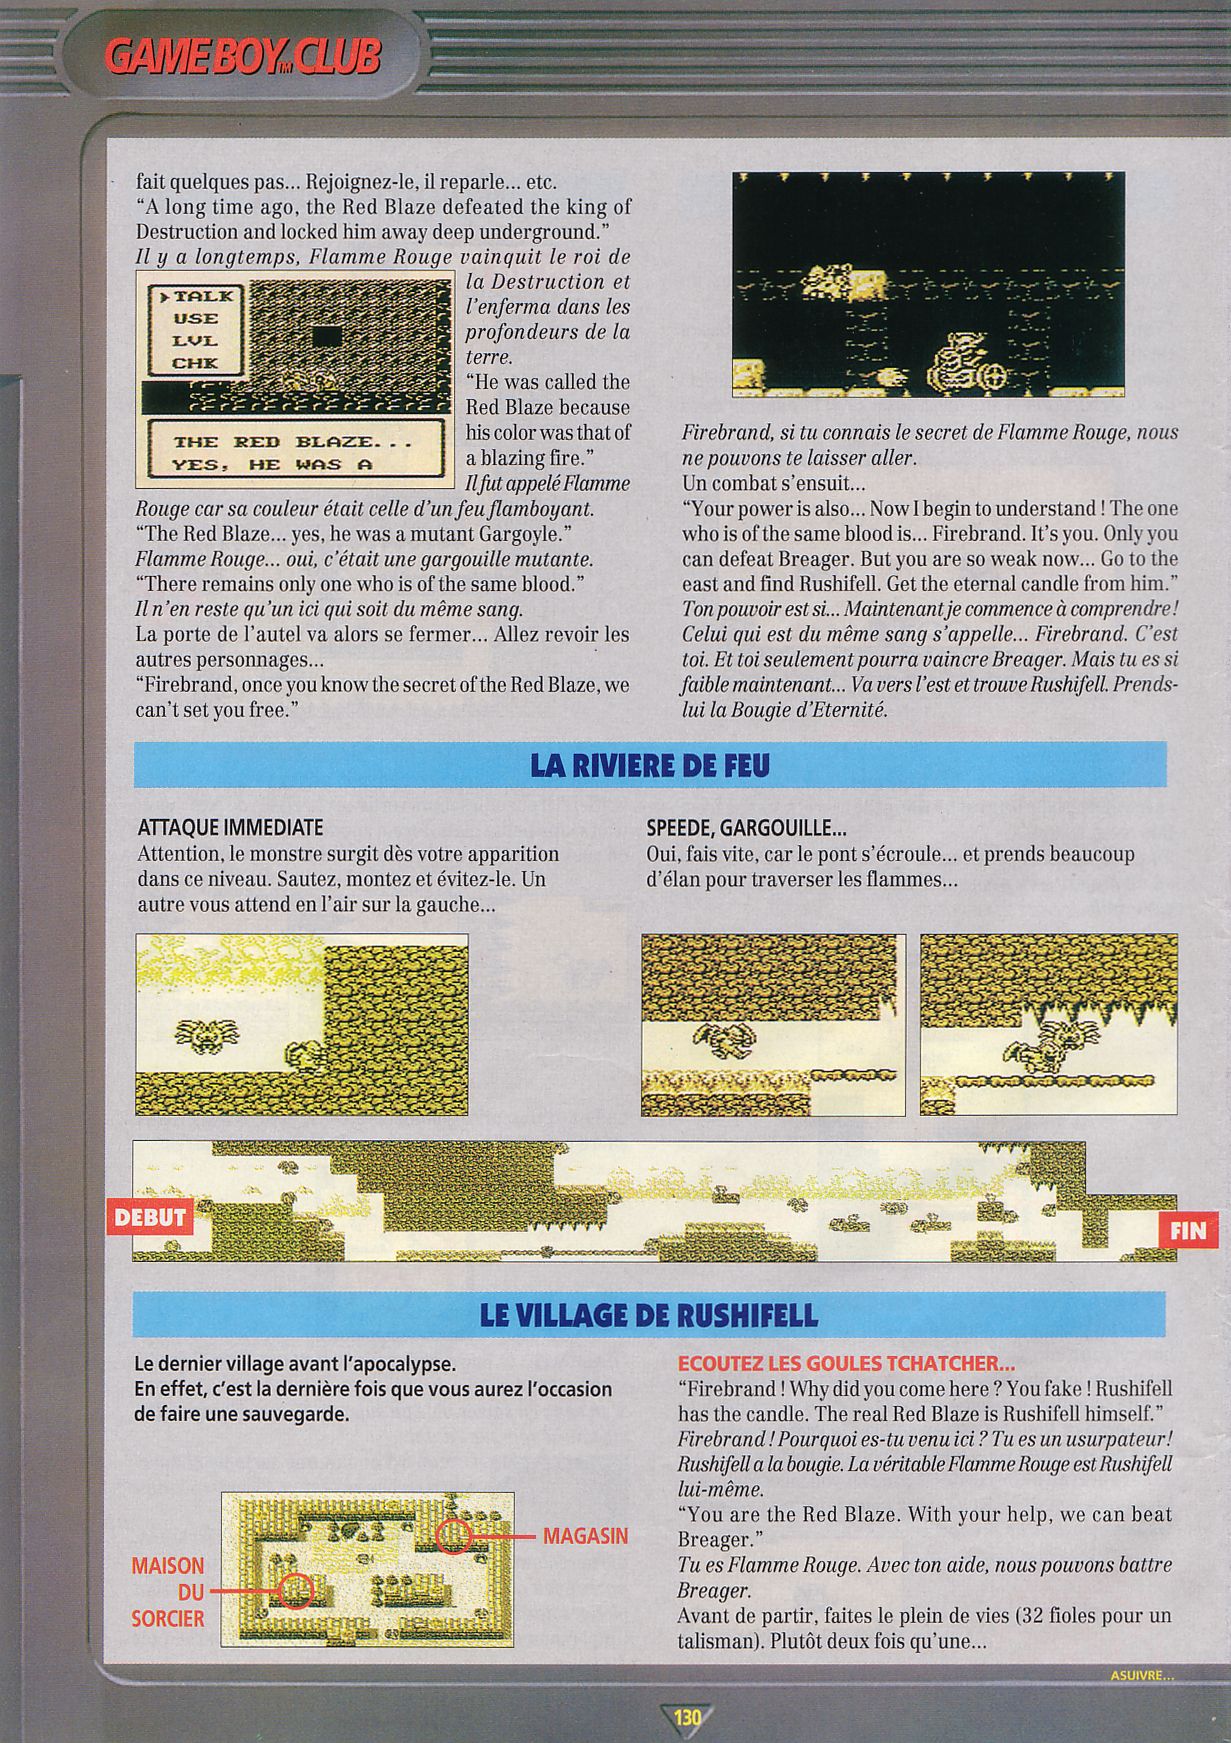 tests//1155/Nintendo Player 007 - Page 130 (1992-11-12).jpg